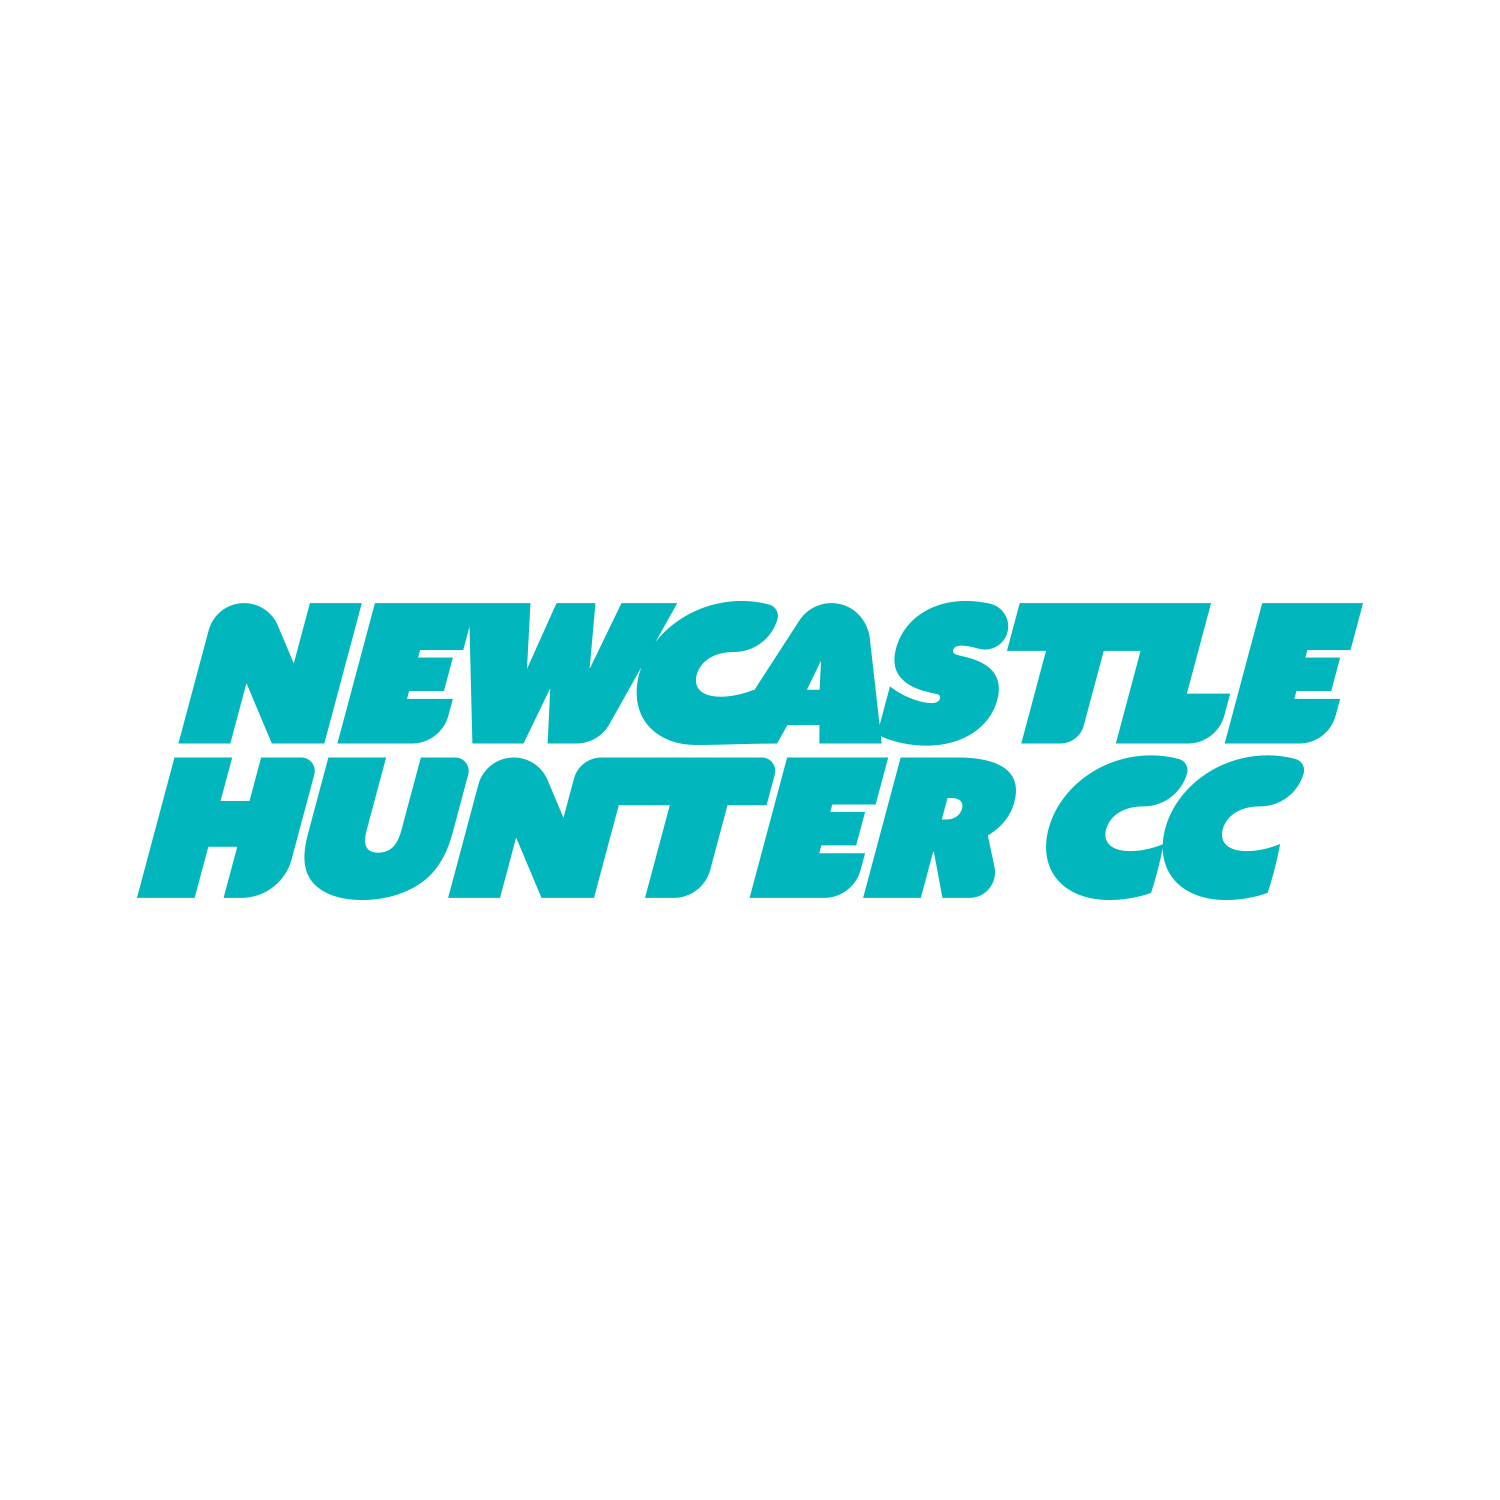 Newcastle Hunter Cycling Club